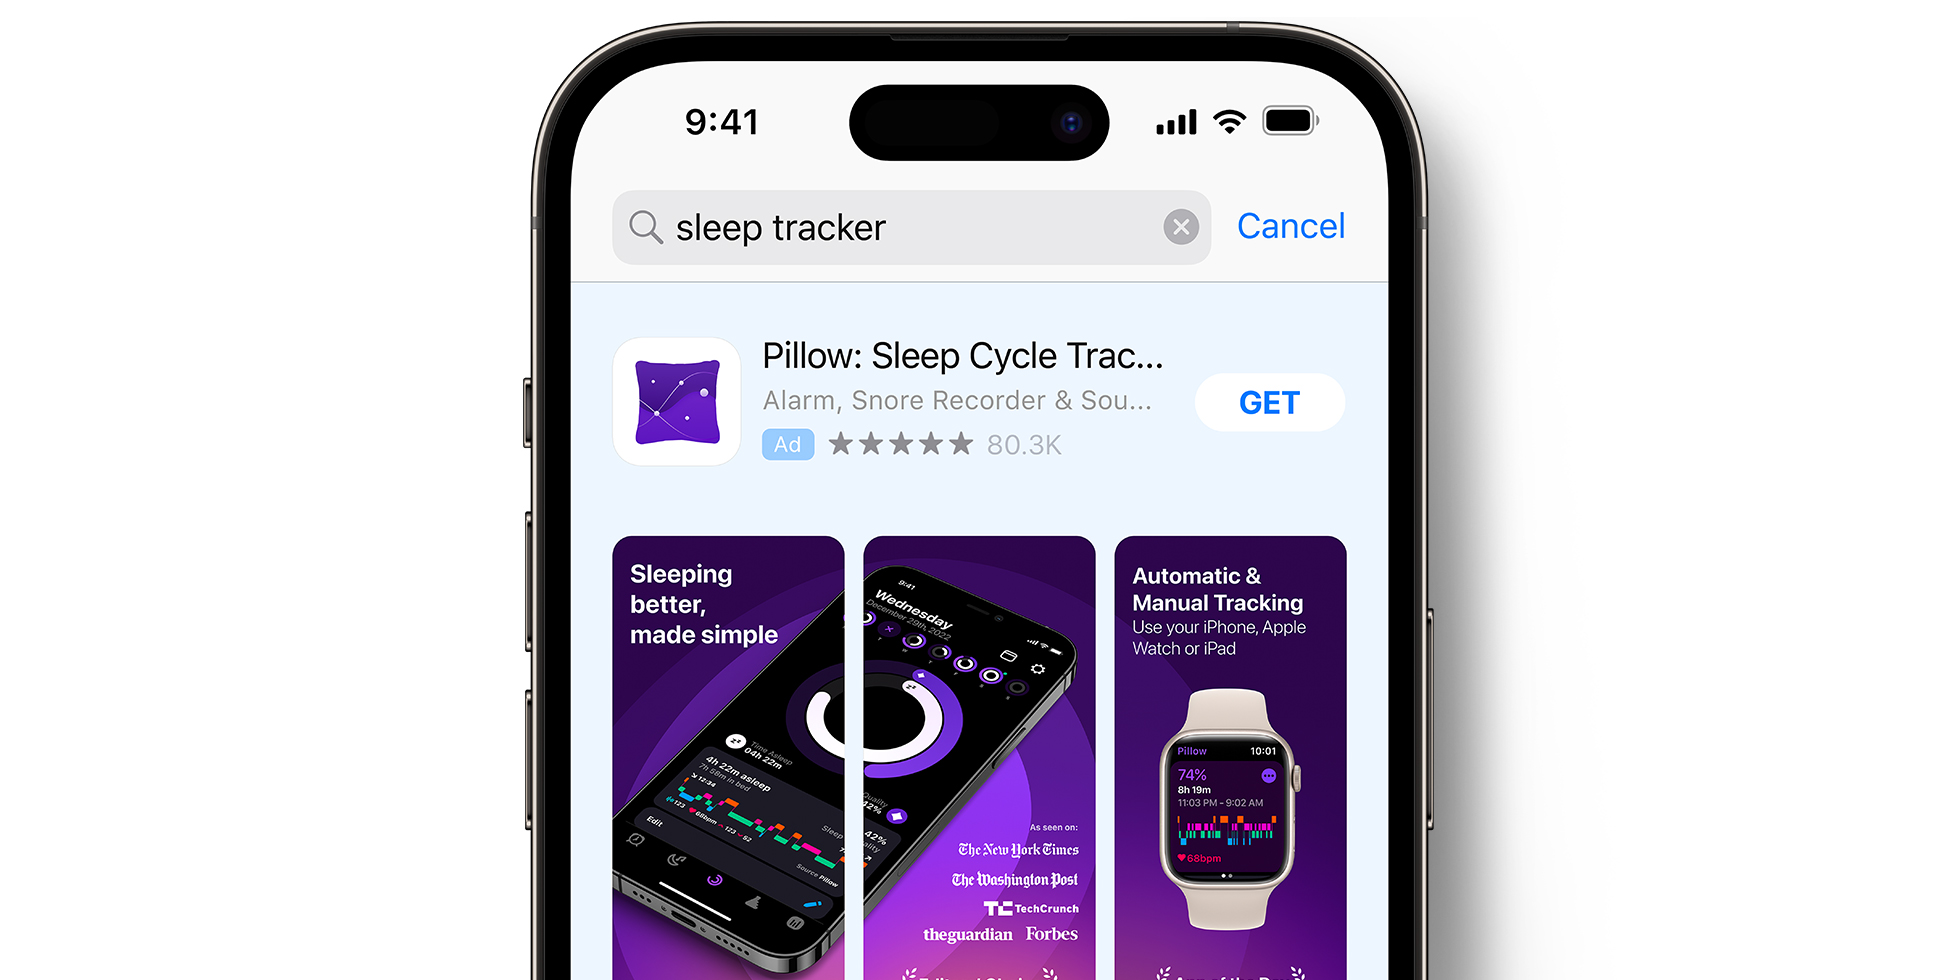 Pillow Anzeige im App Store